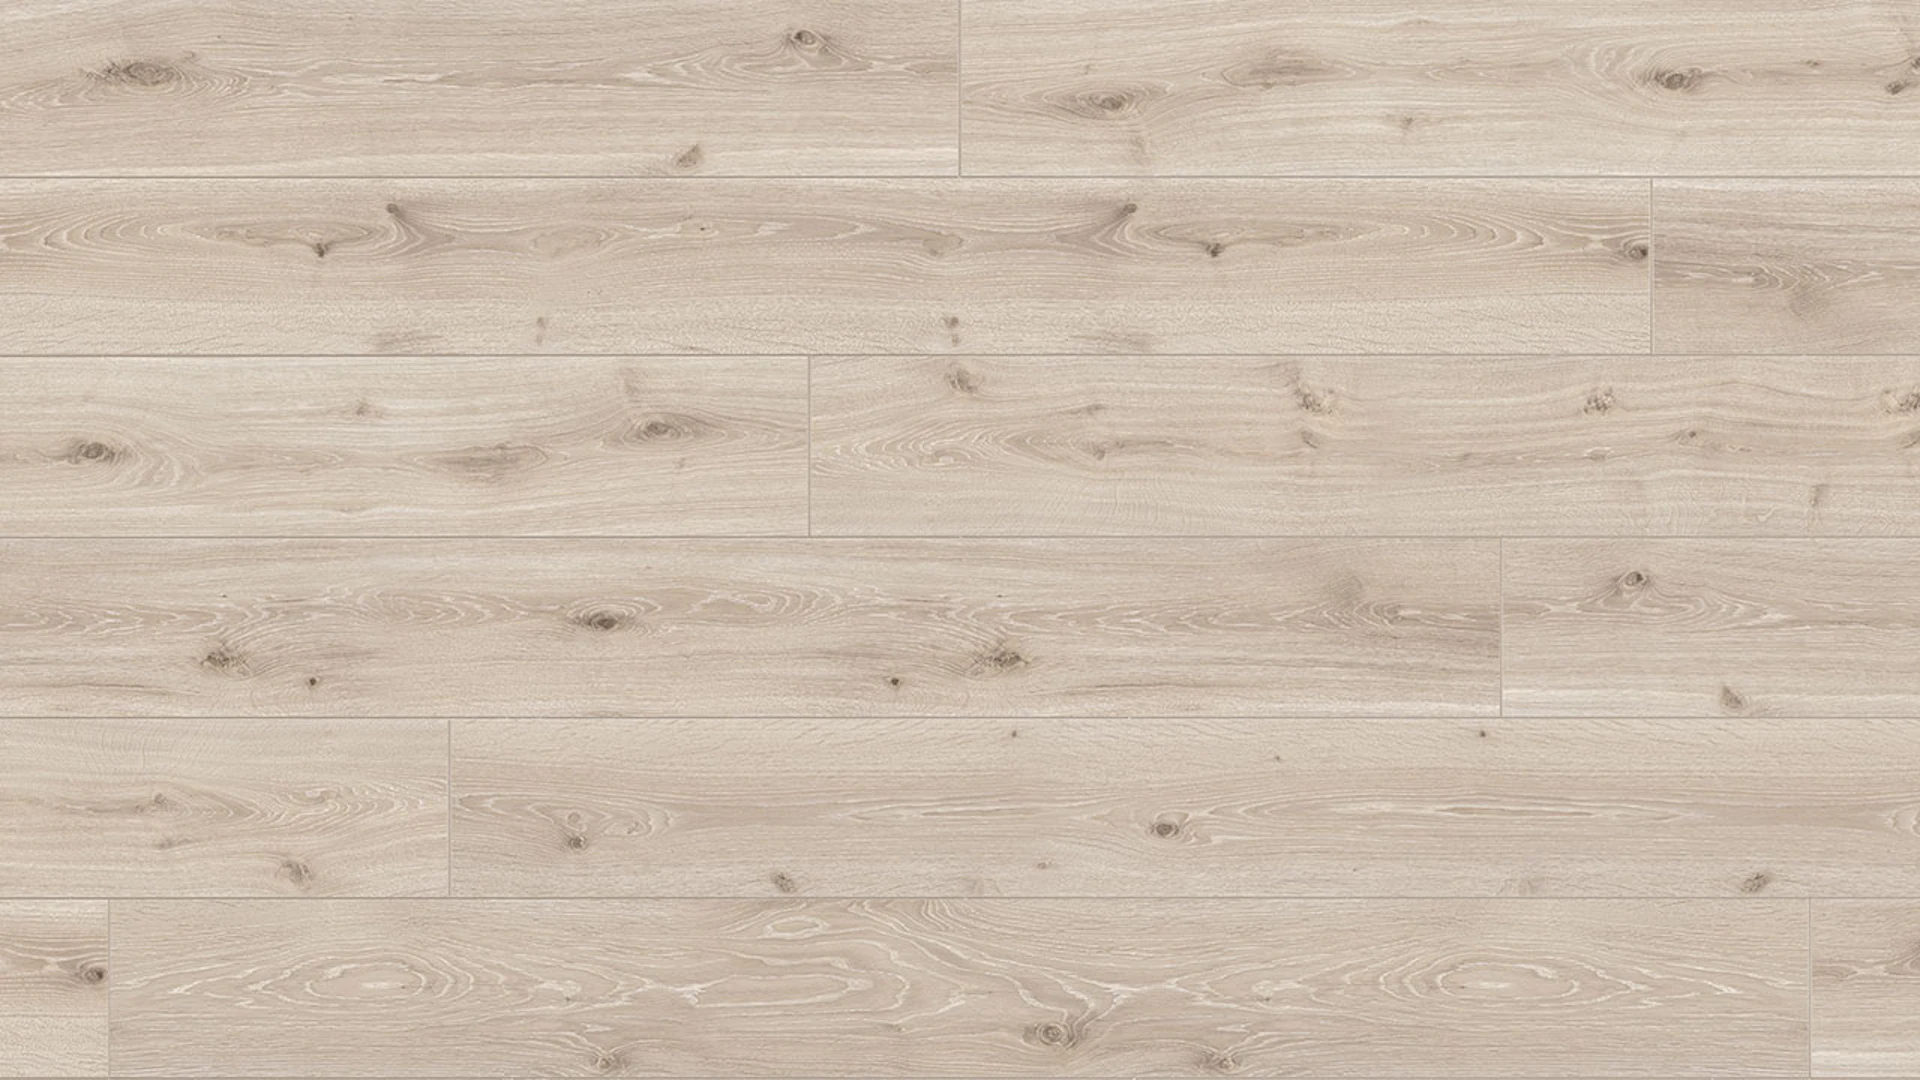 Parador laminate flooring - Trendtime 6 - oak castell whiteglazed - brushed texture - 4-V-joint - interlocking planks